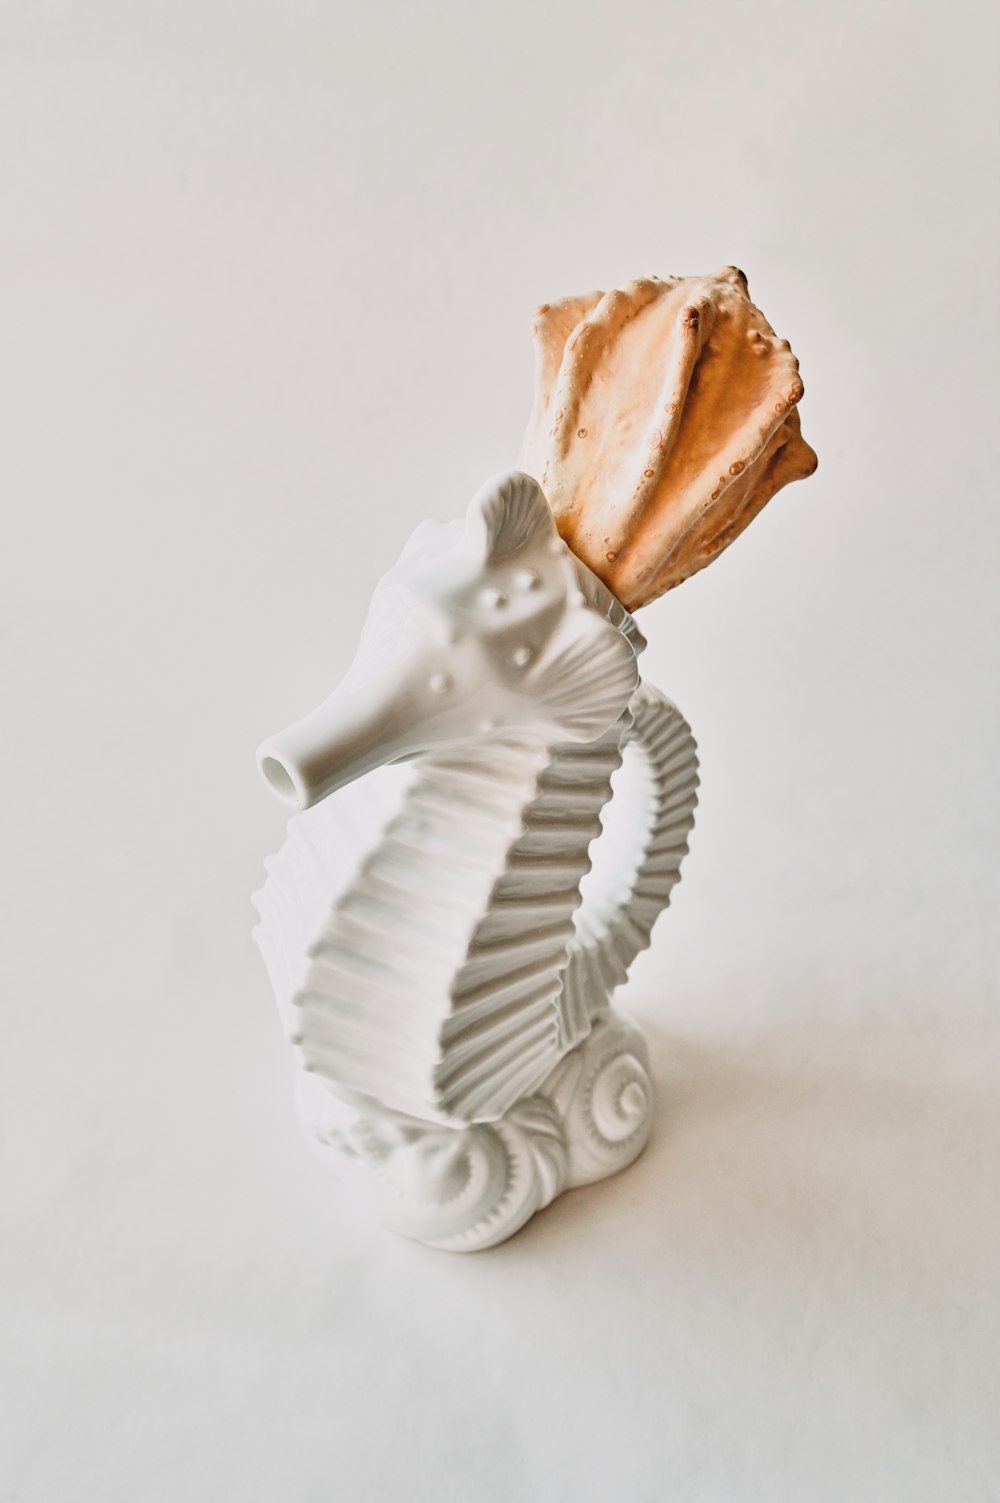 white ceramic angel figurine on white surface